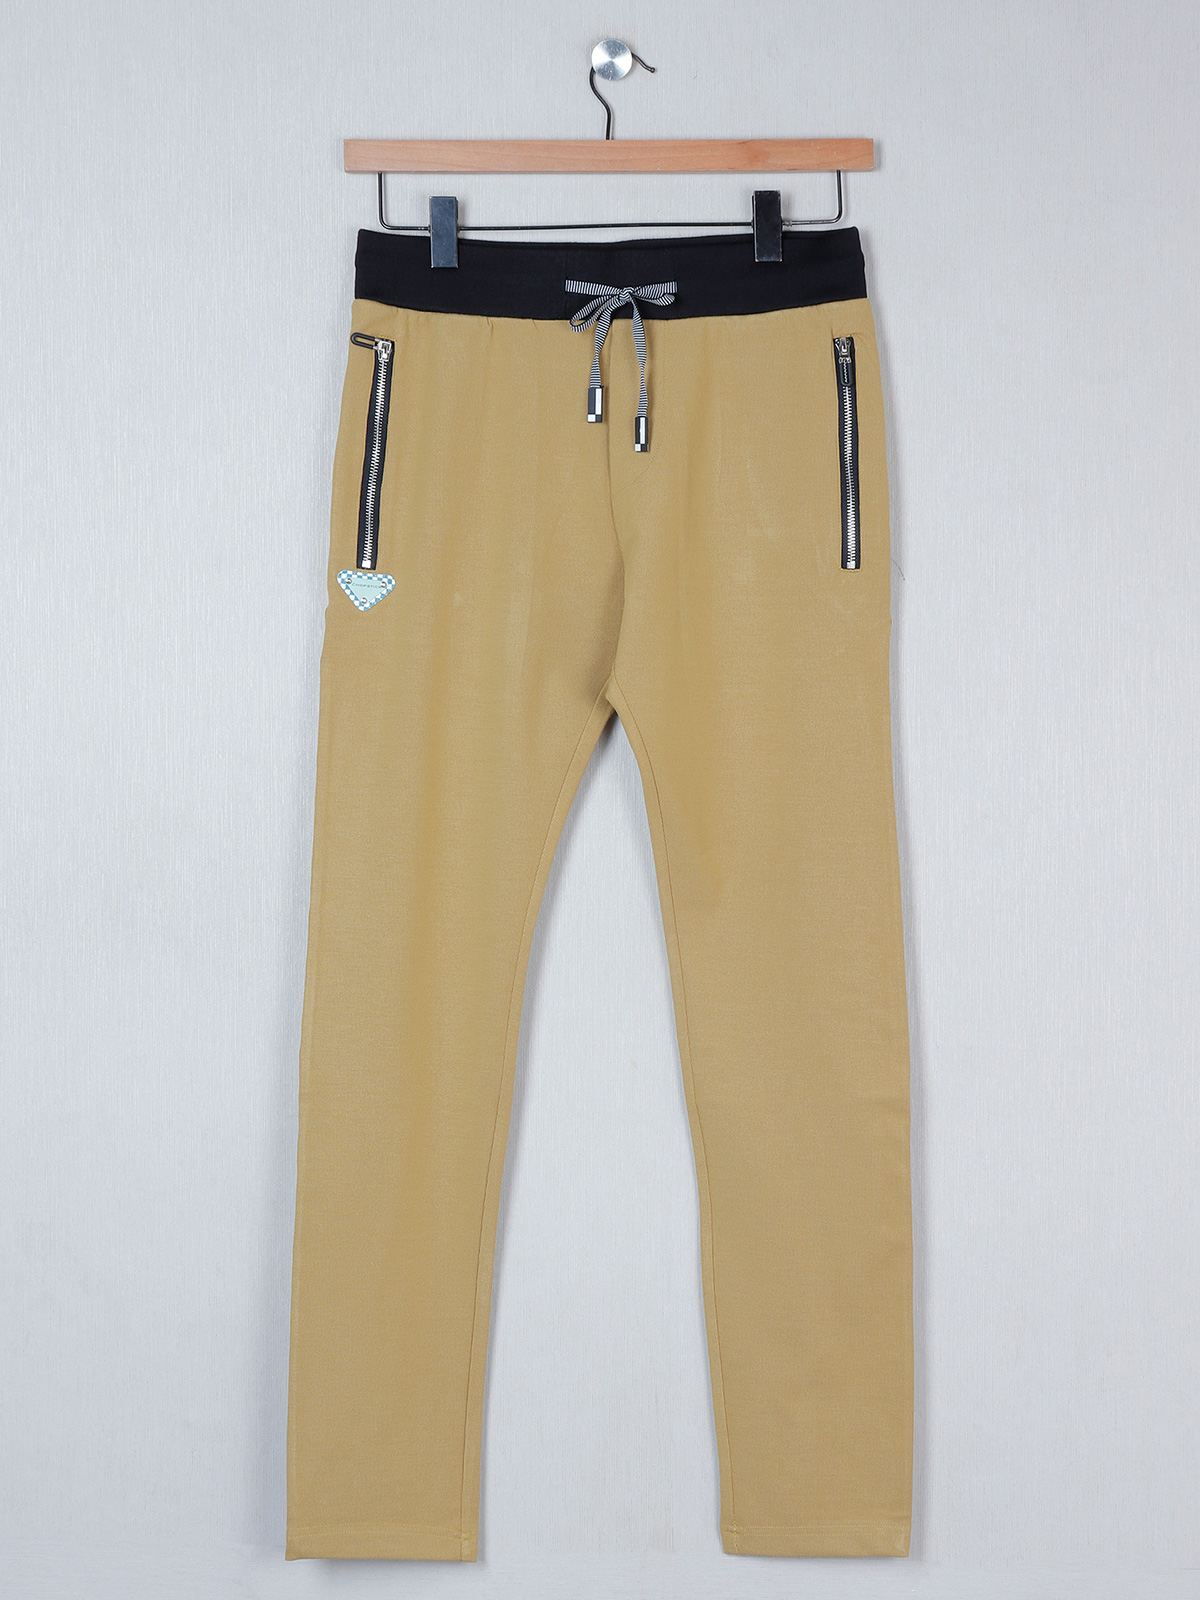 Elegant & Comfortable Cotton Lycra Track Pant For Men.